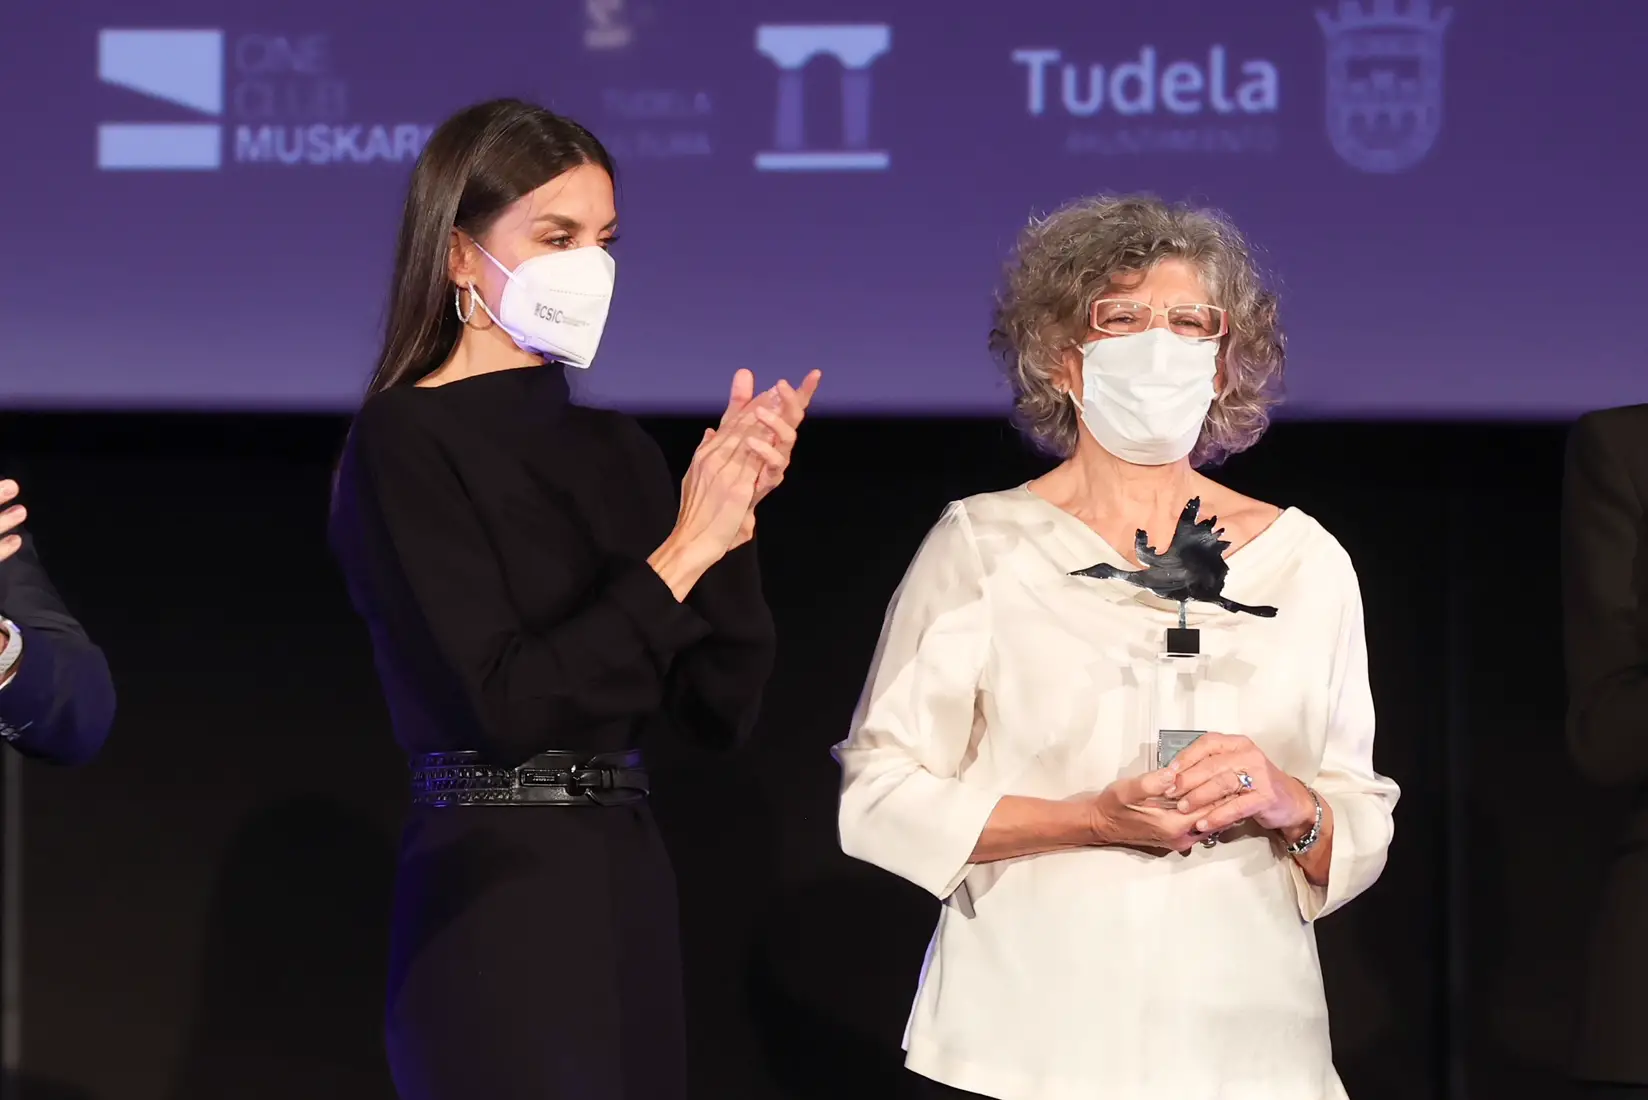 Queen Letizia attended the Tudela Opera Film Festival Award